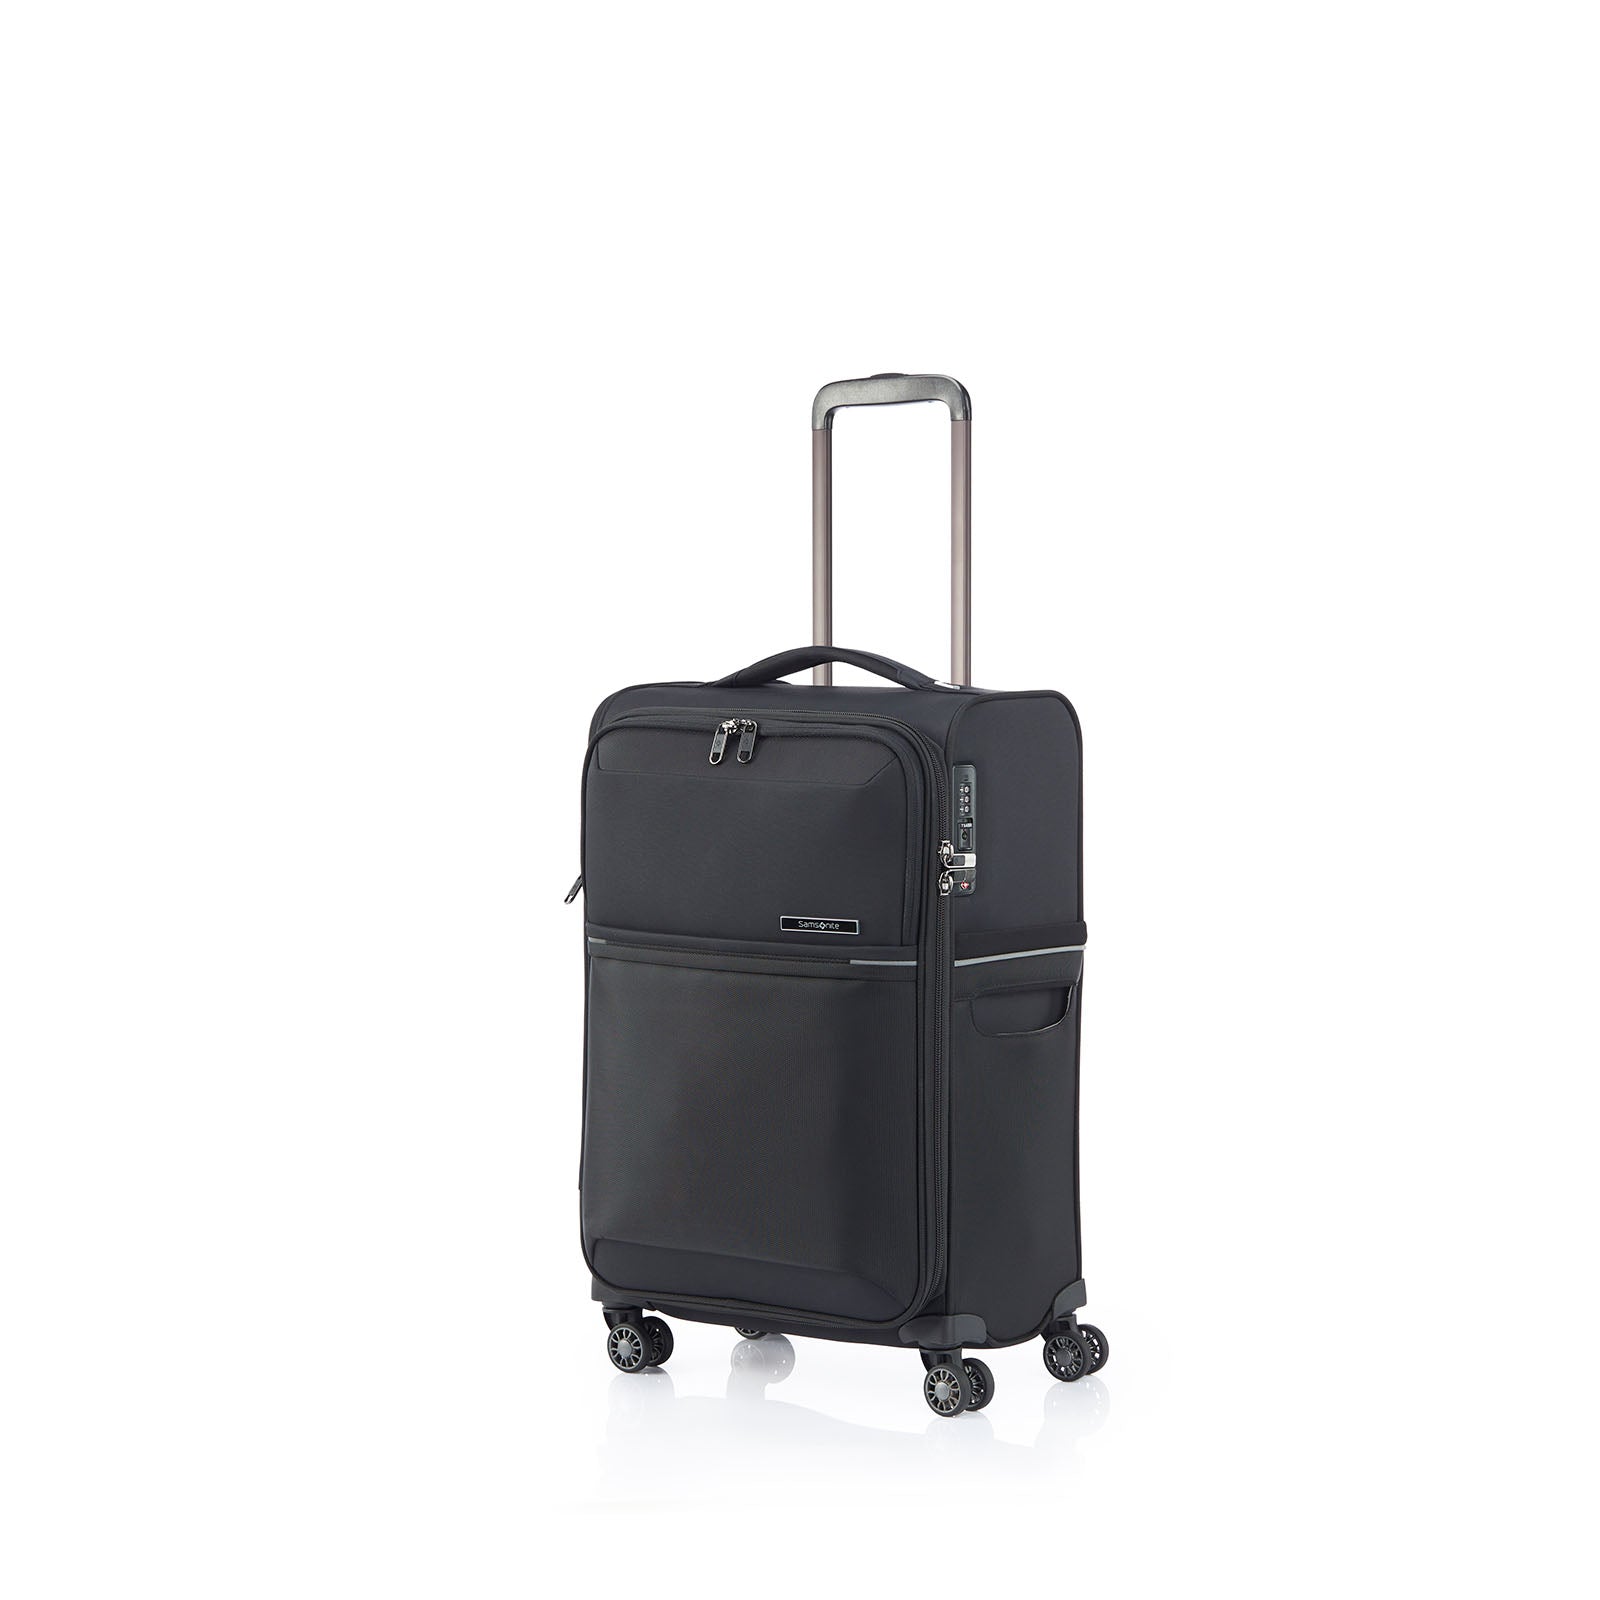 Samsonite-73h-55cm-Suitcase-Black-Front-Angle